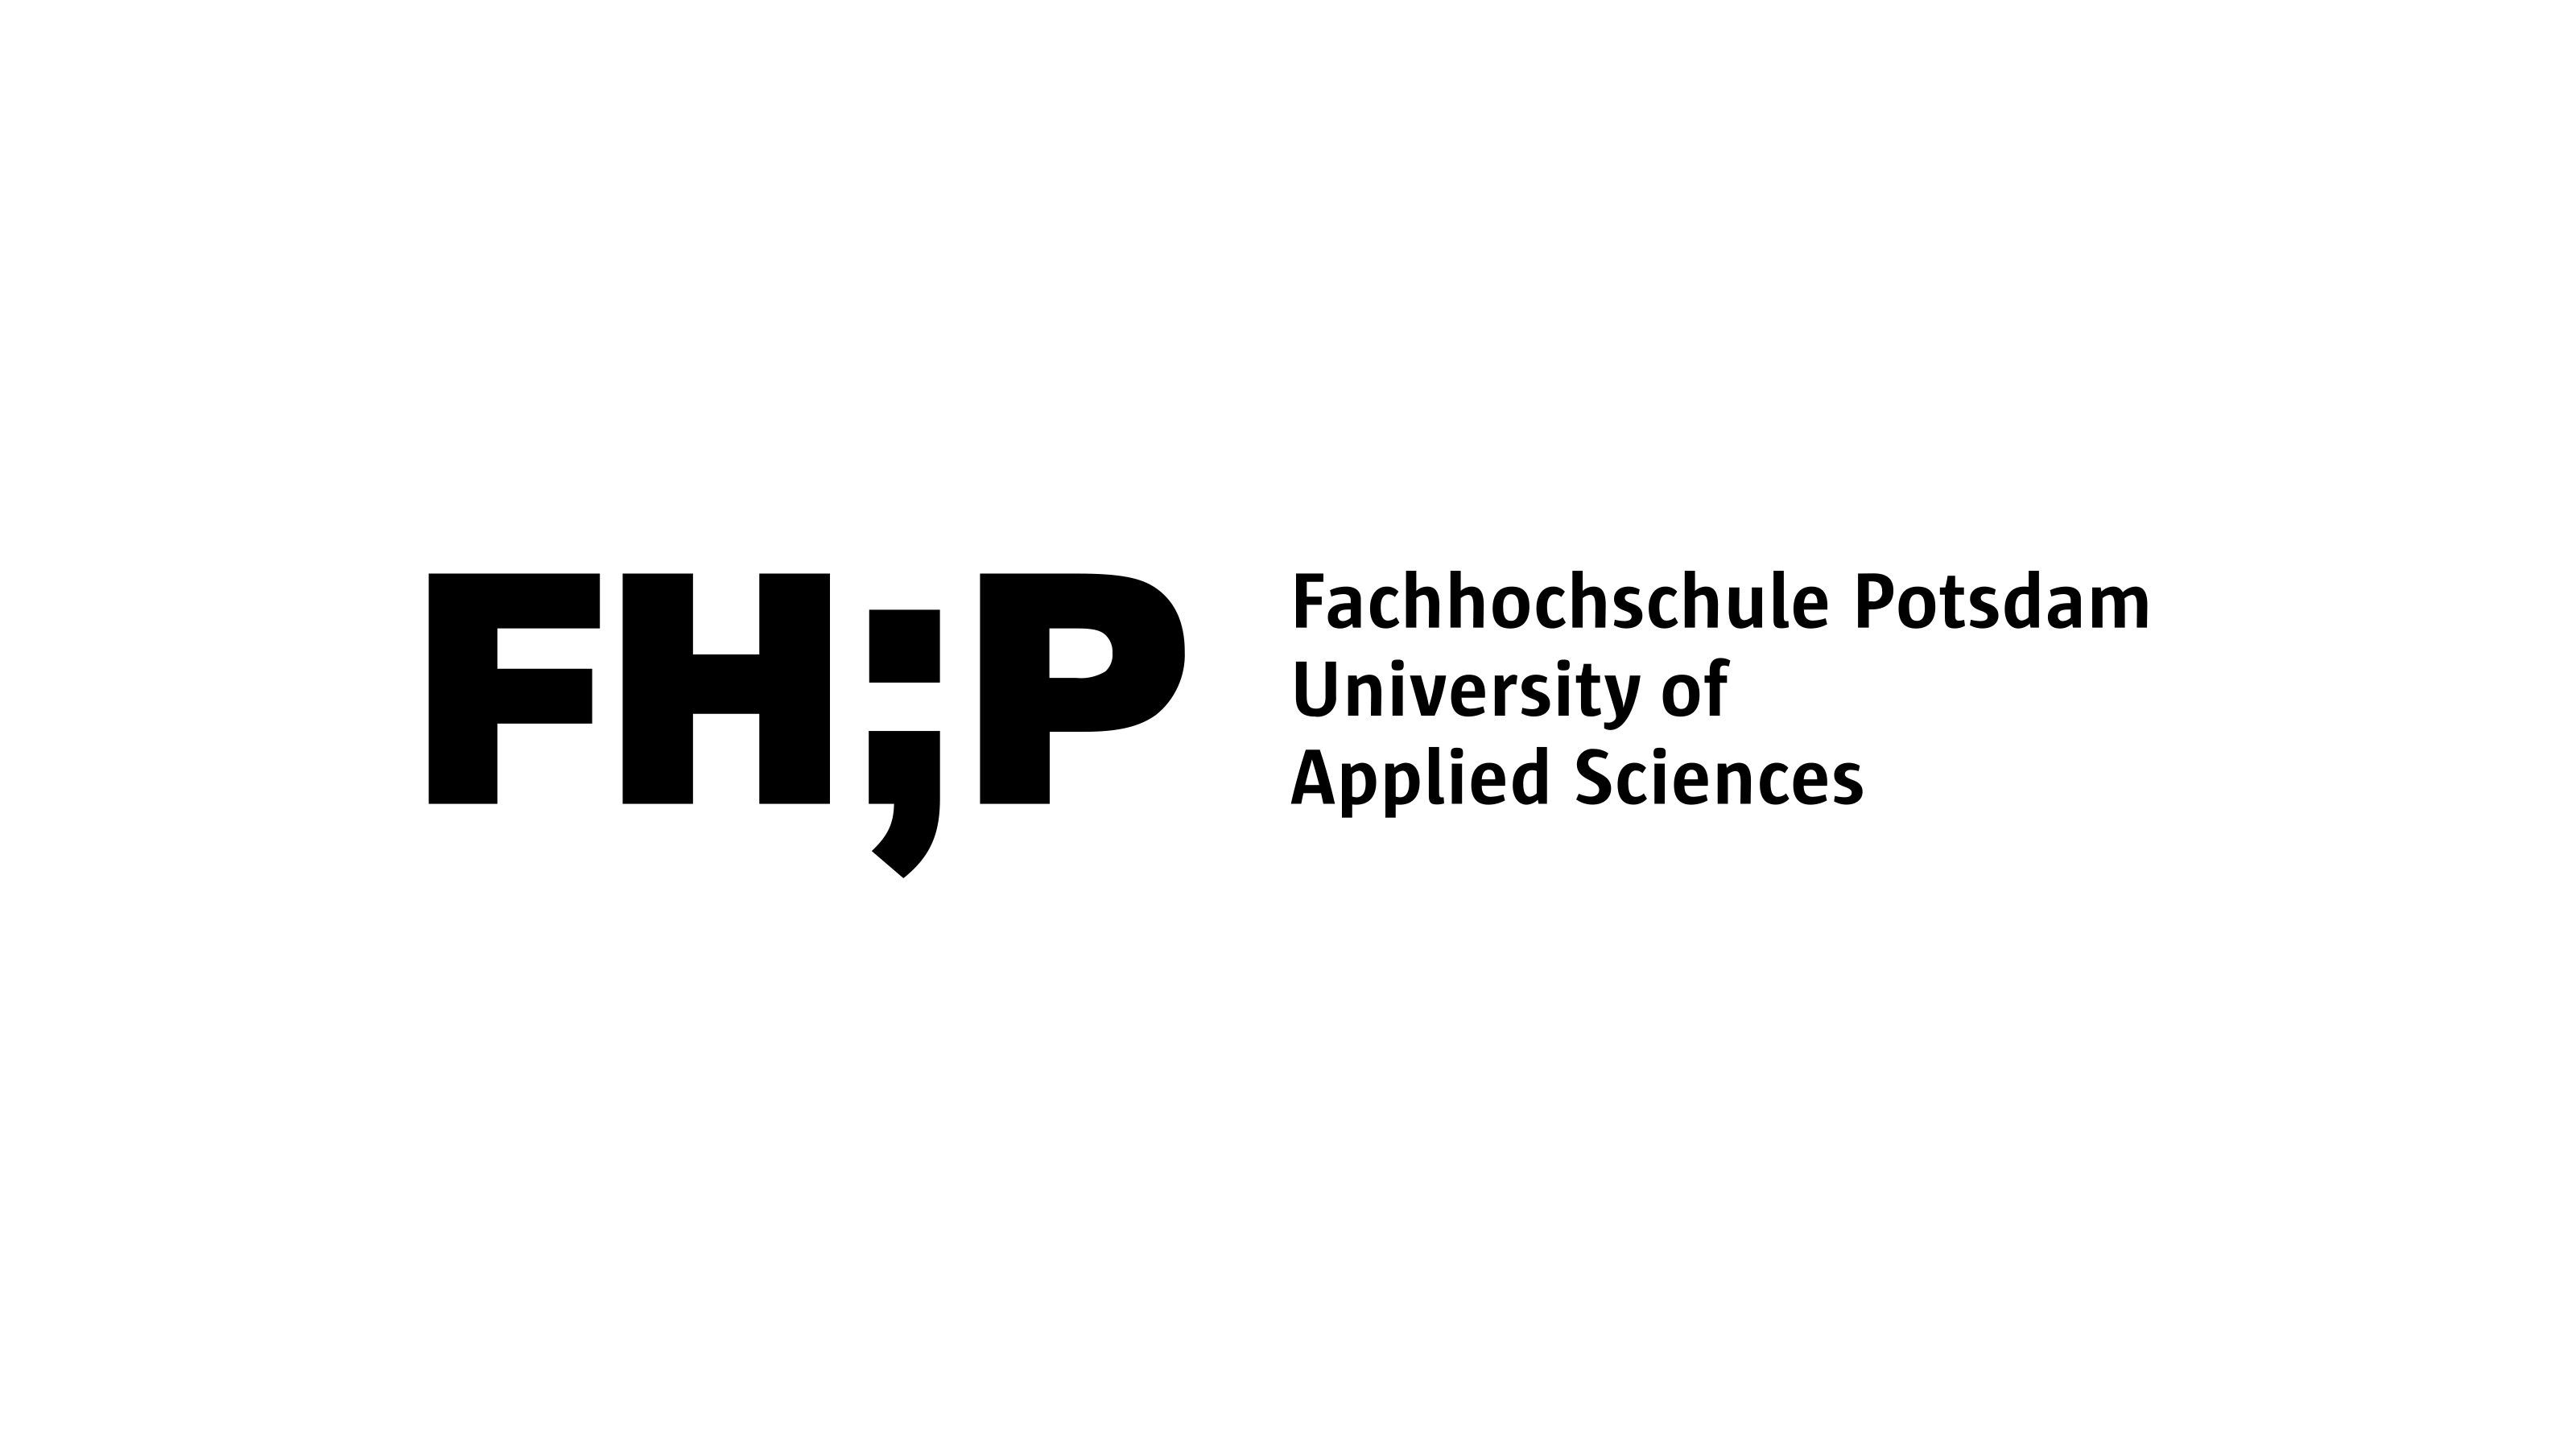 www.fh-potsdam.de